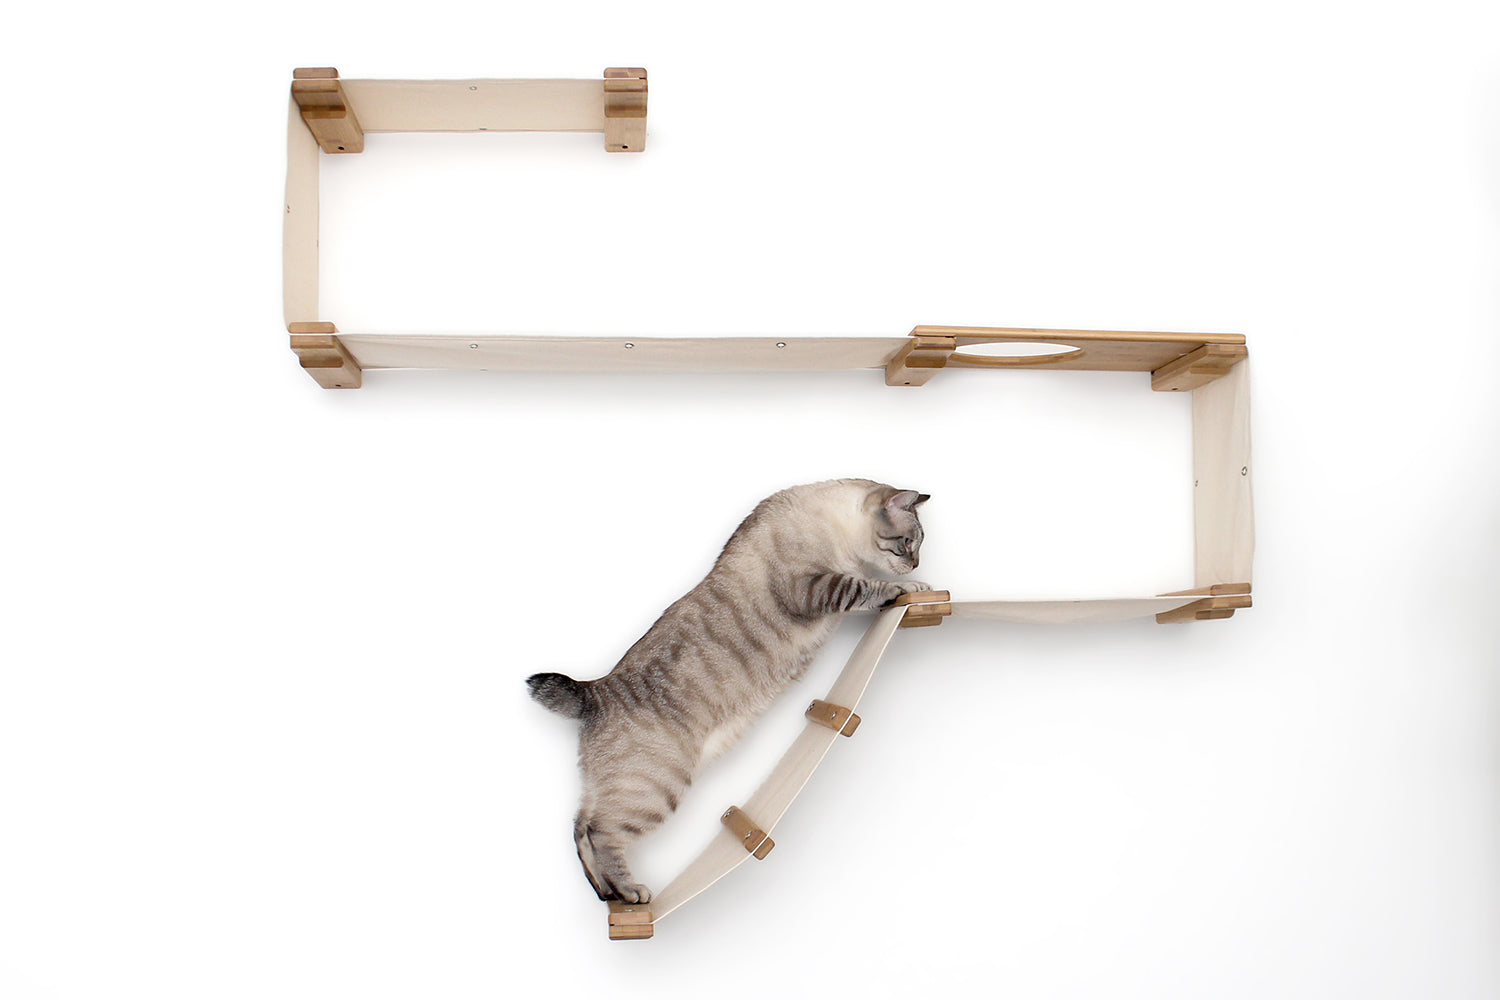 Bobtail cat climbing up the Play wall mounted cat tree